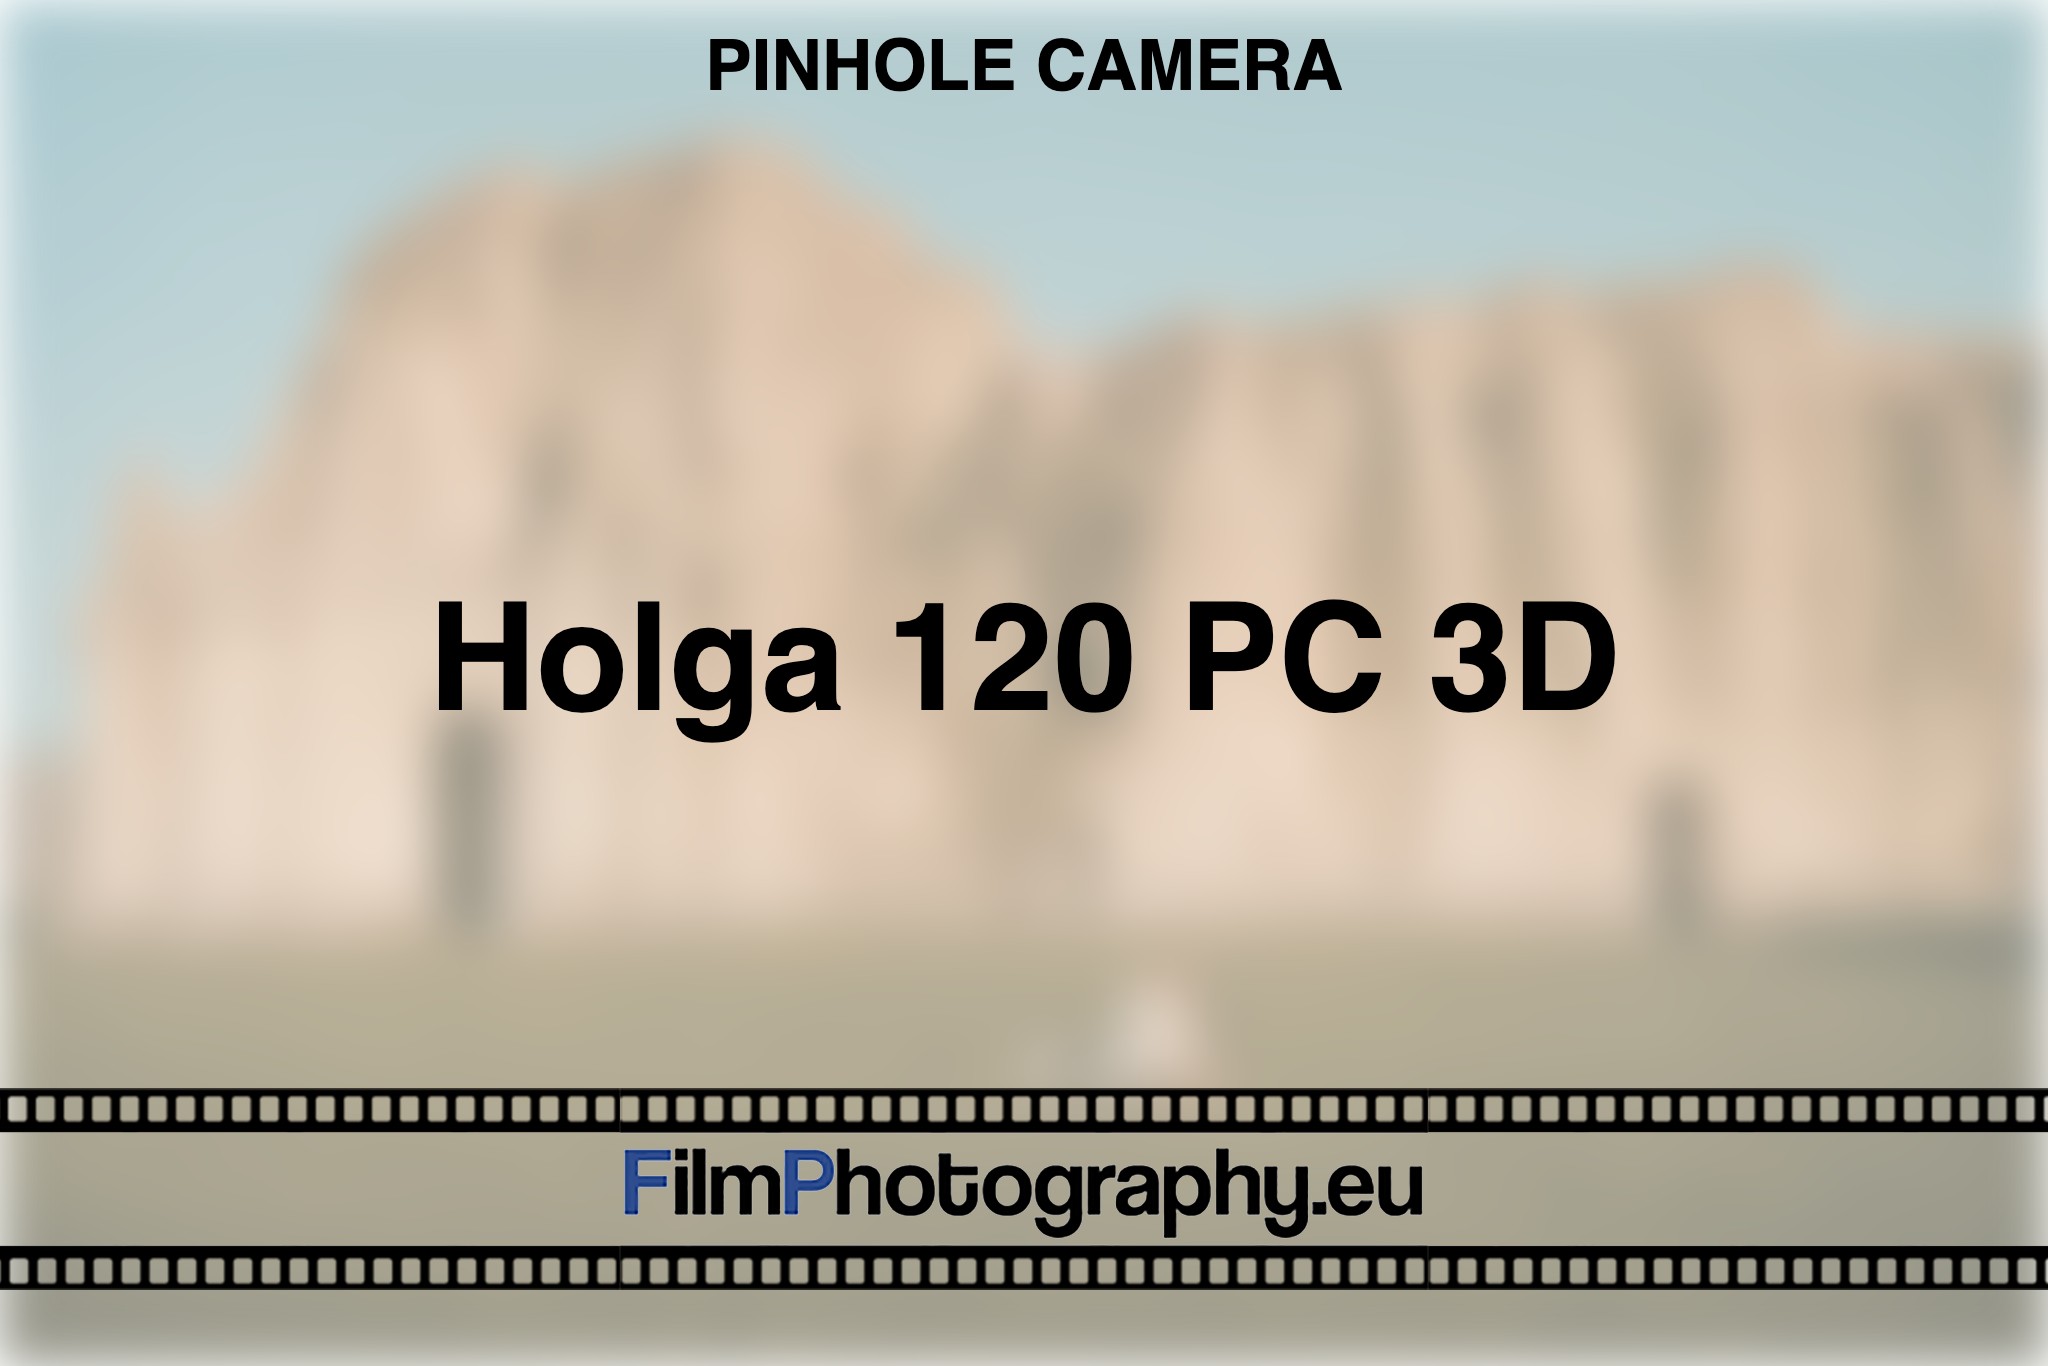 holga-120-pc-3d-pinhole-camera-bnv